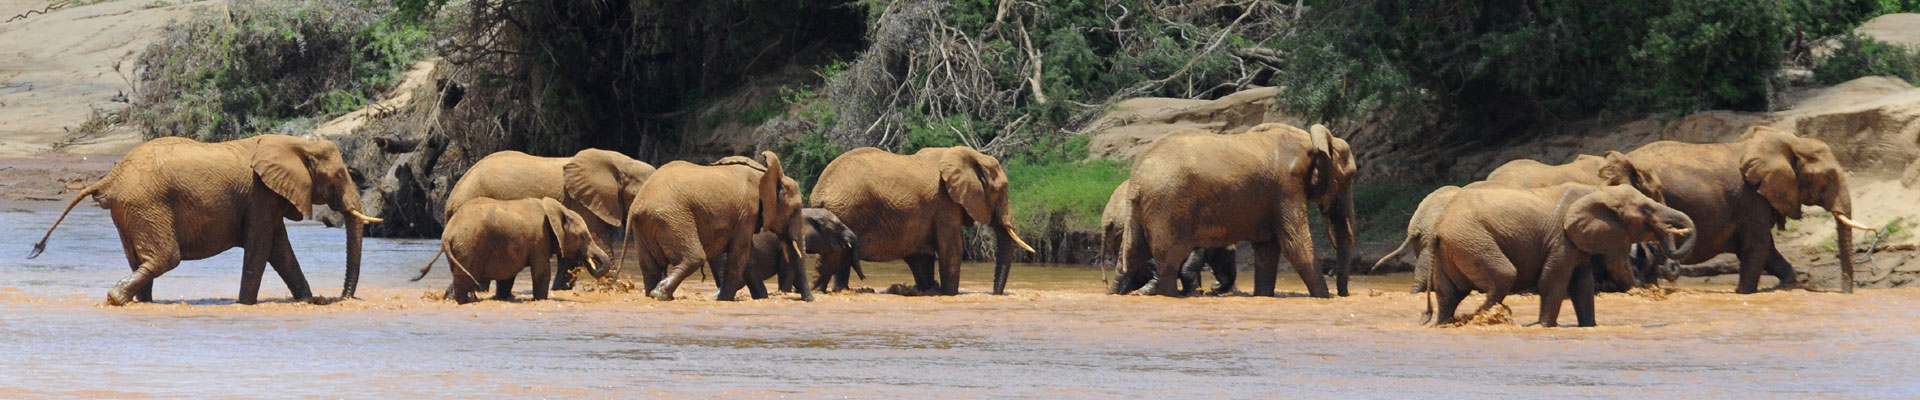 Elephants in Masai Mara and Samburu out of season. Photograph by Paul McDougall.